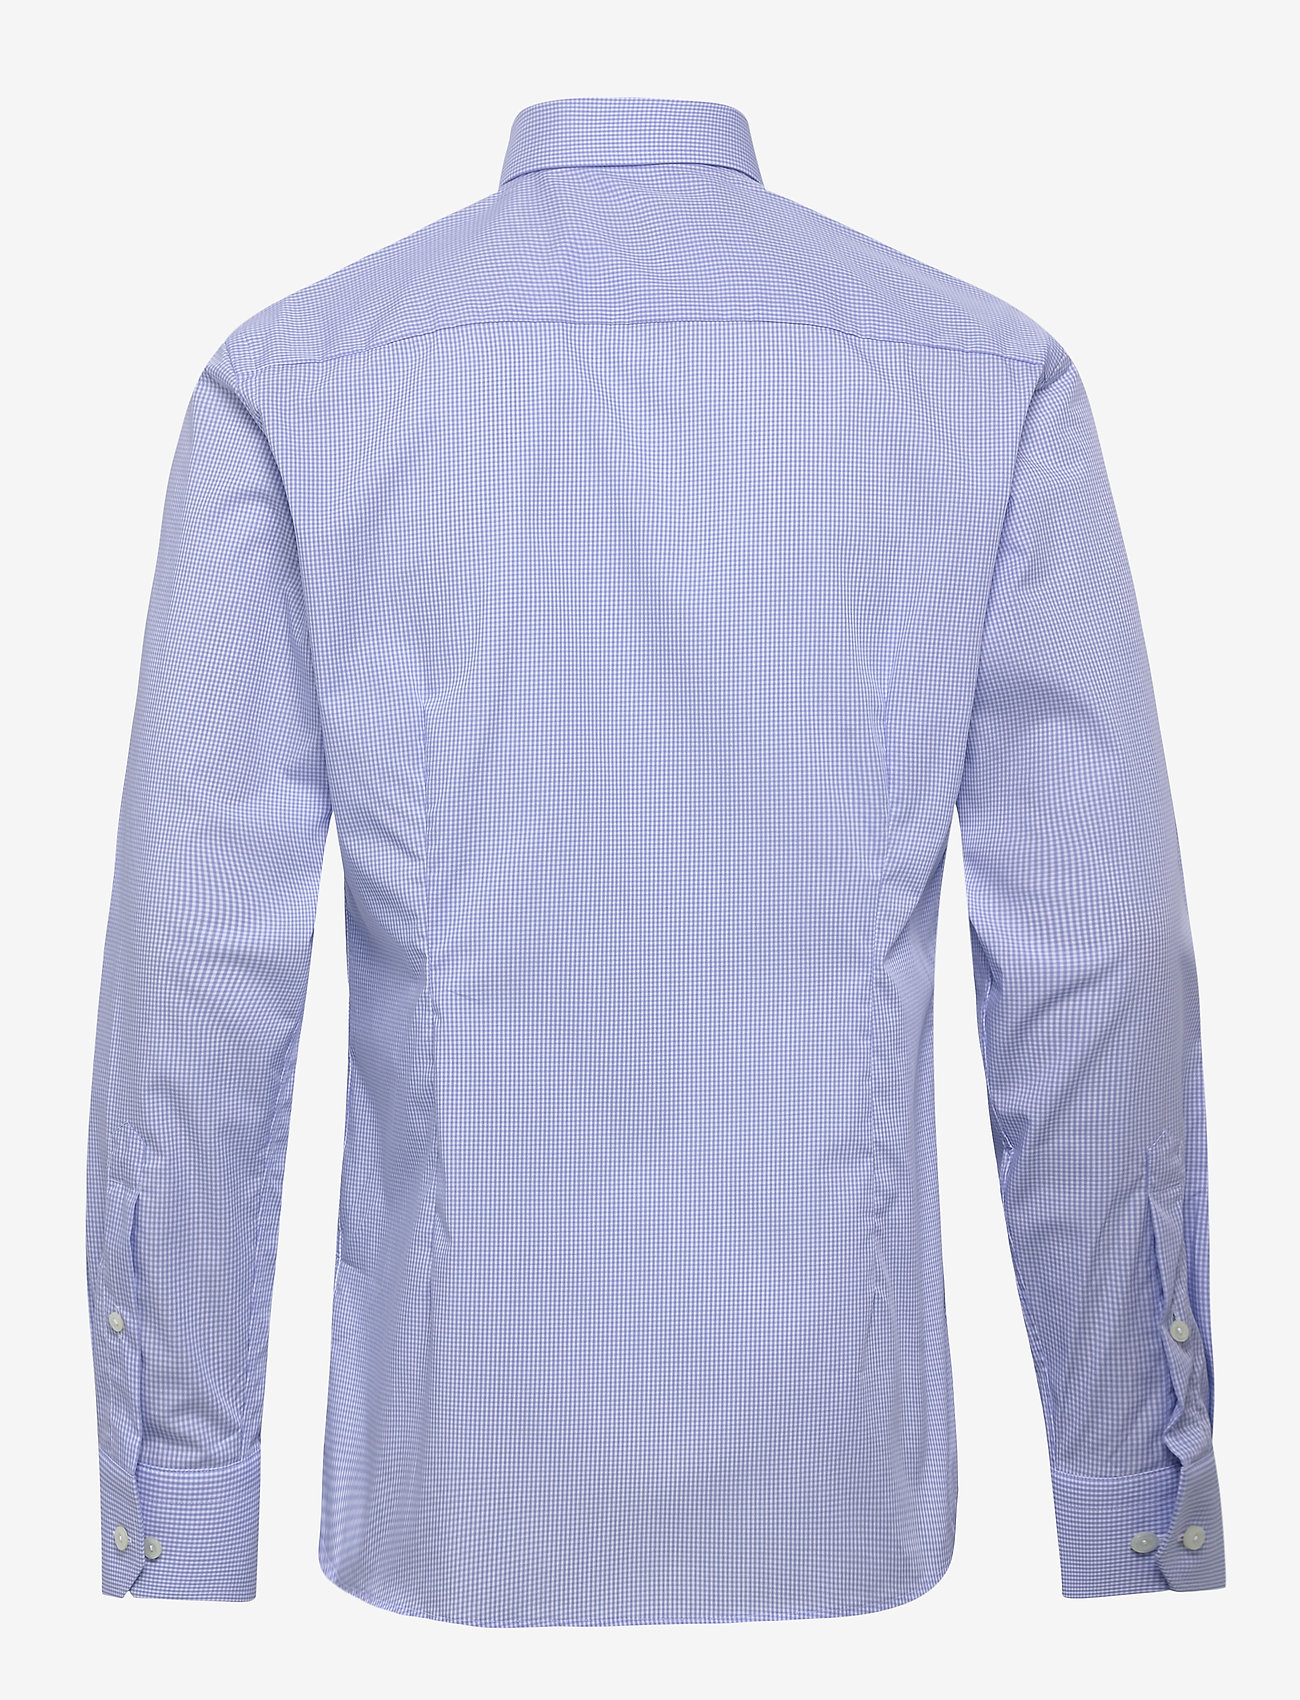 Eton - Check Poplin Shirt - basic-hemden - blue - 1